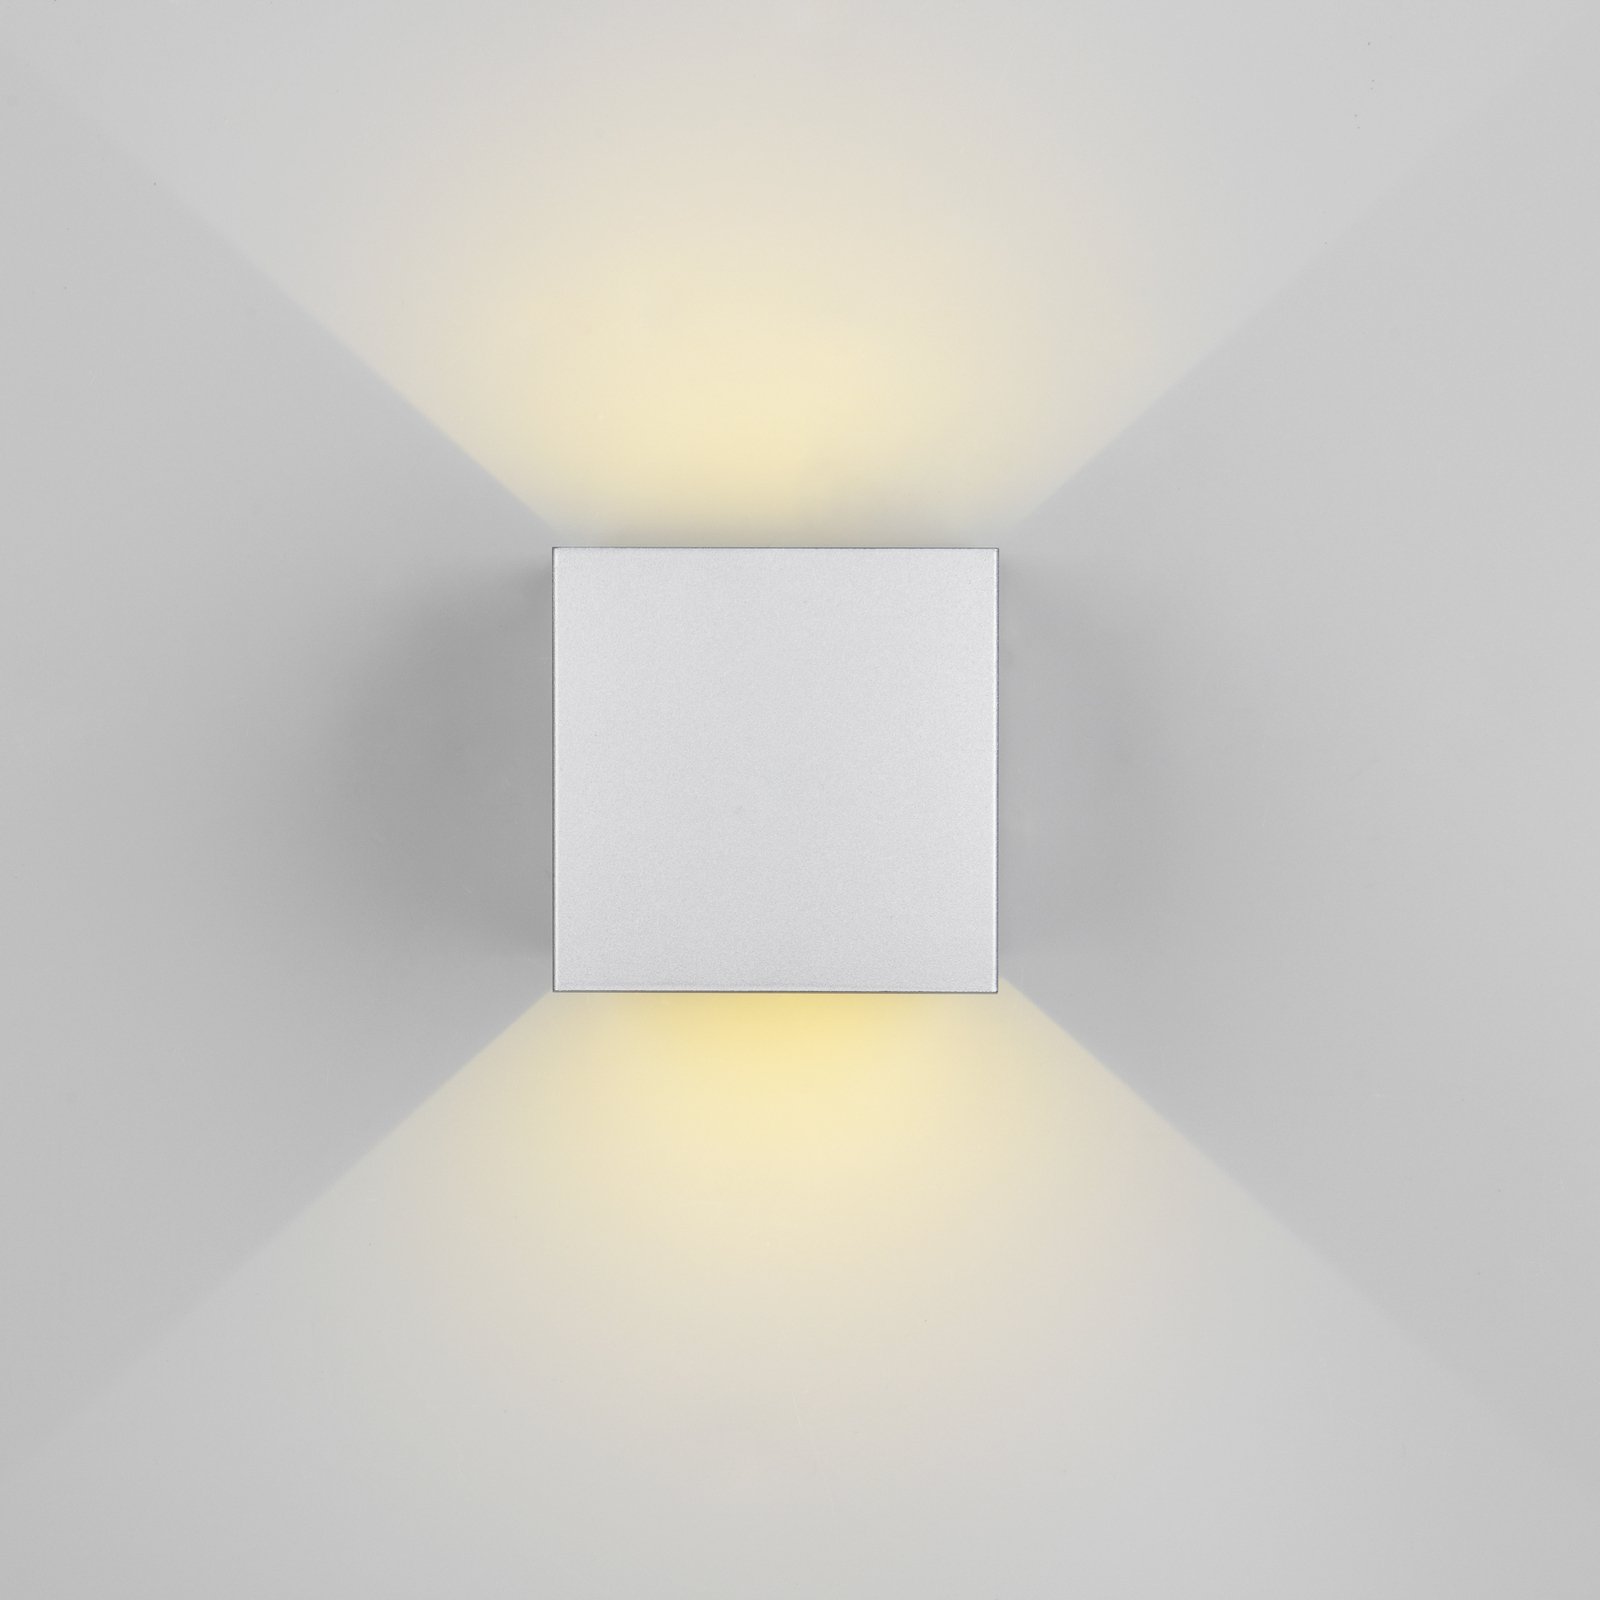 Zunanja stenska svetilka LED Talent, barva titana, širina 10 cm, senzor